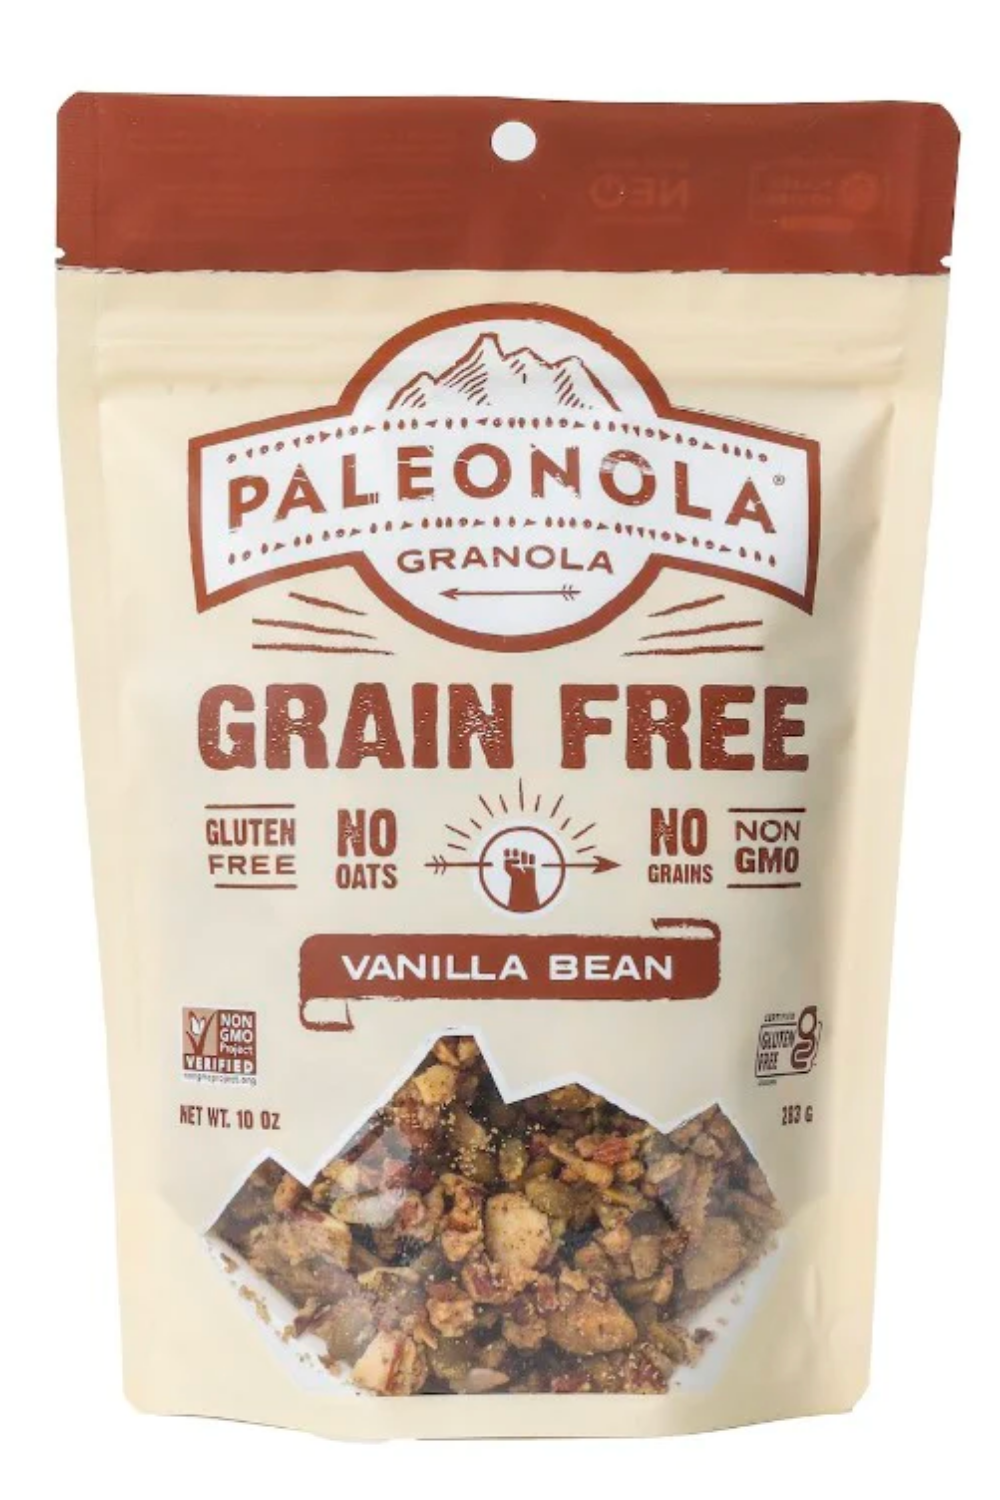 Paleonola Granola - Vanilla Bean, Vanilla, 10 oz, bag